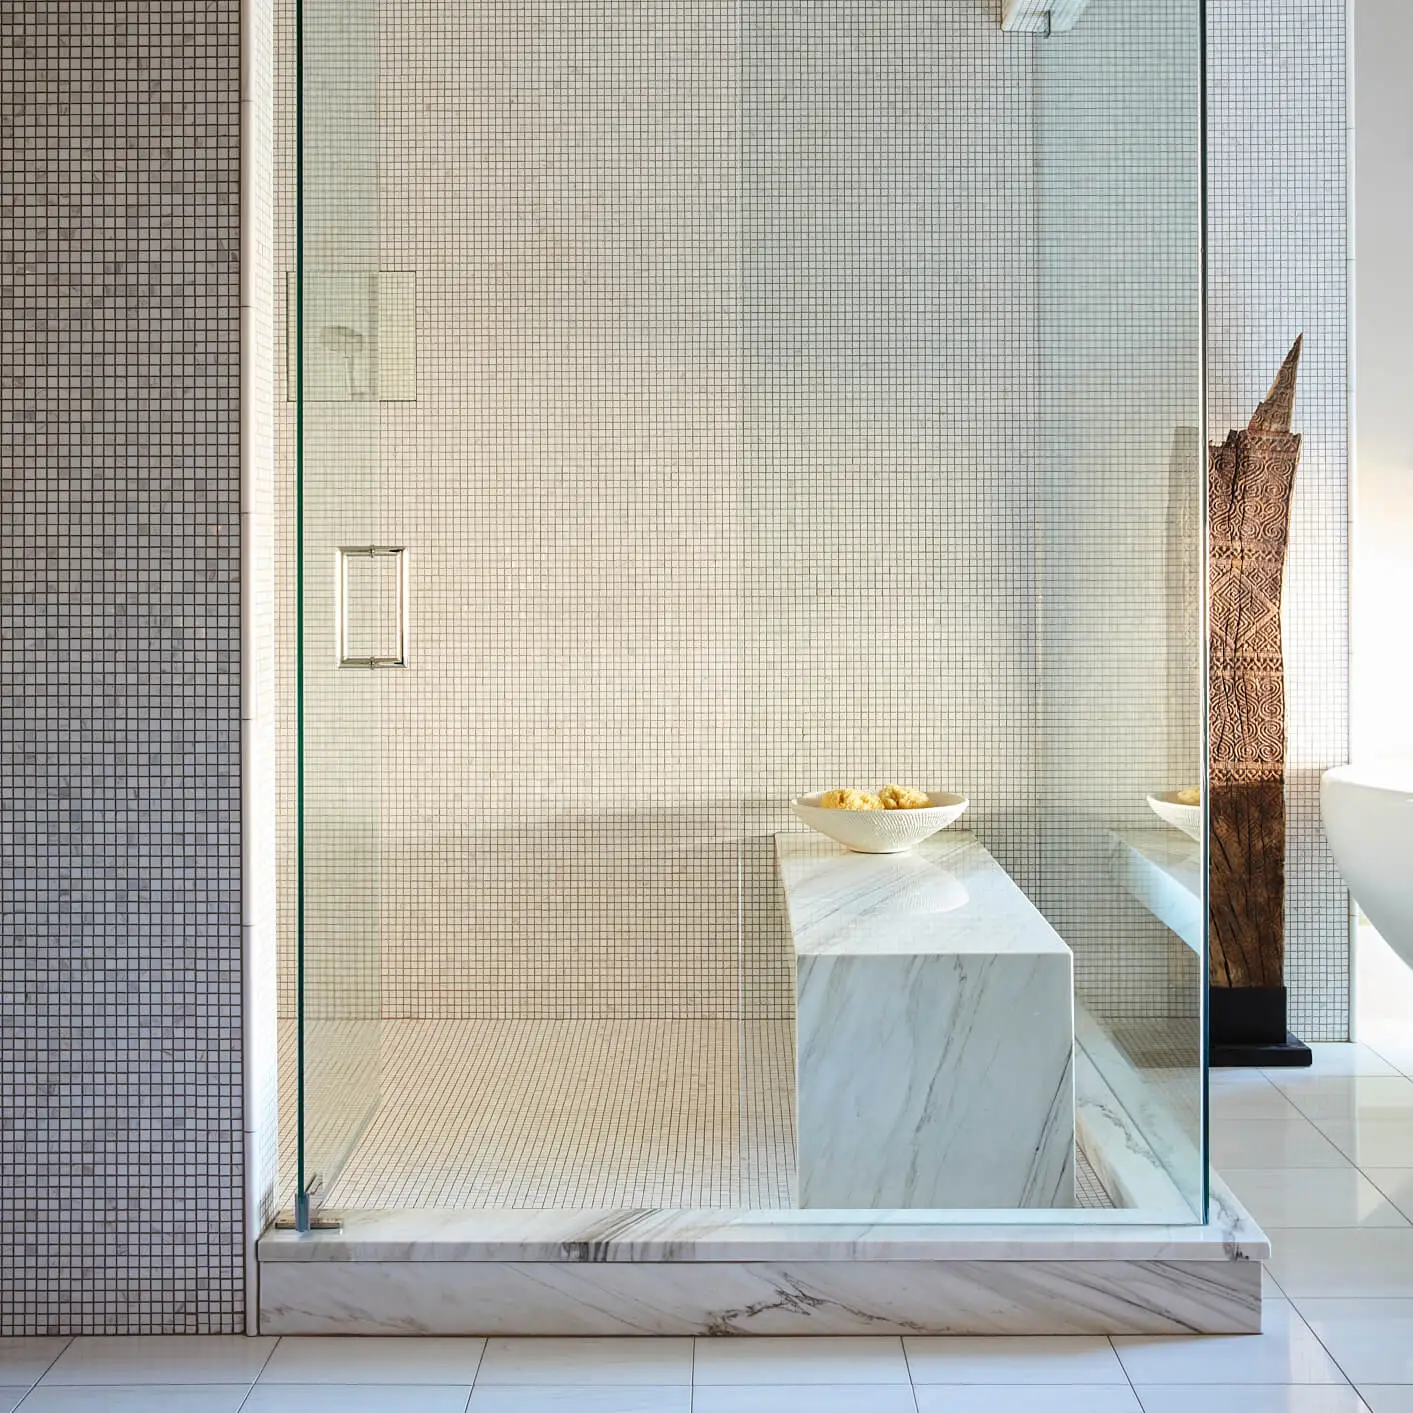 Denver interior designers primary suite shower